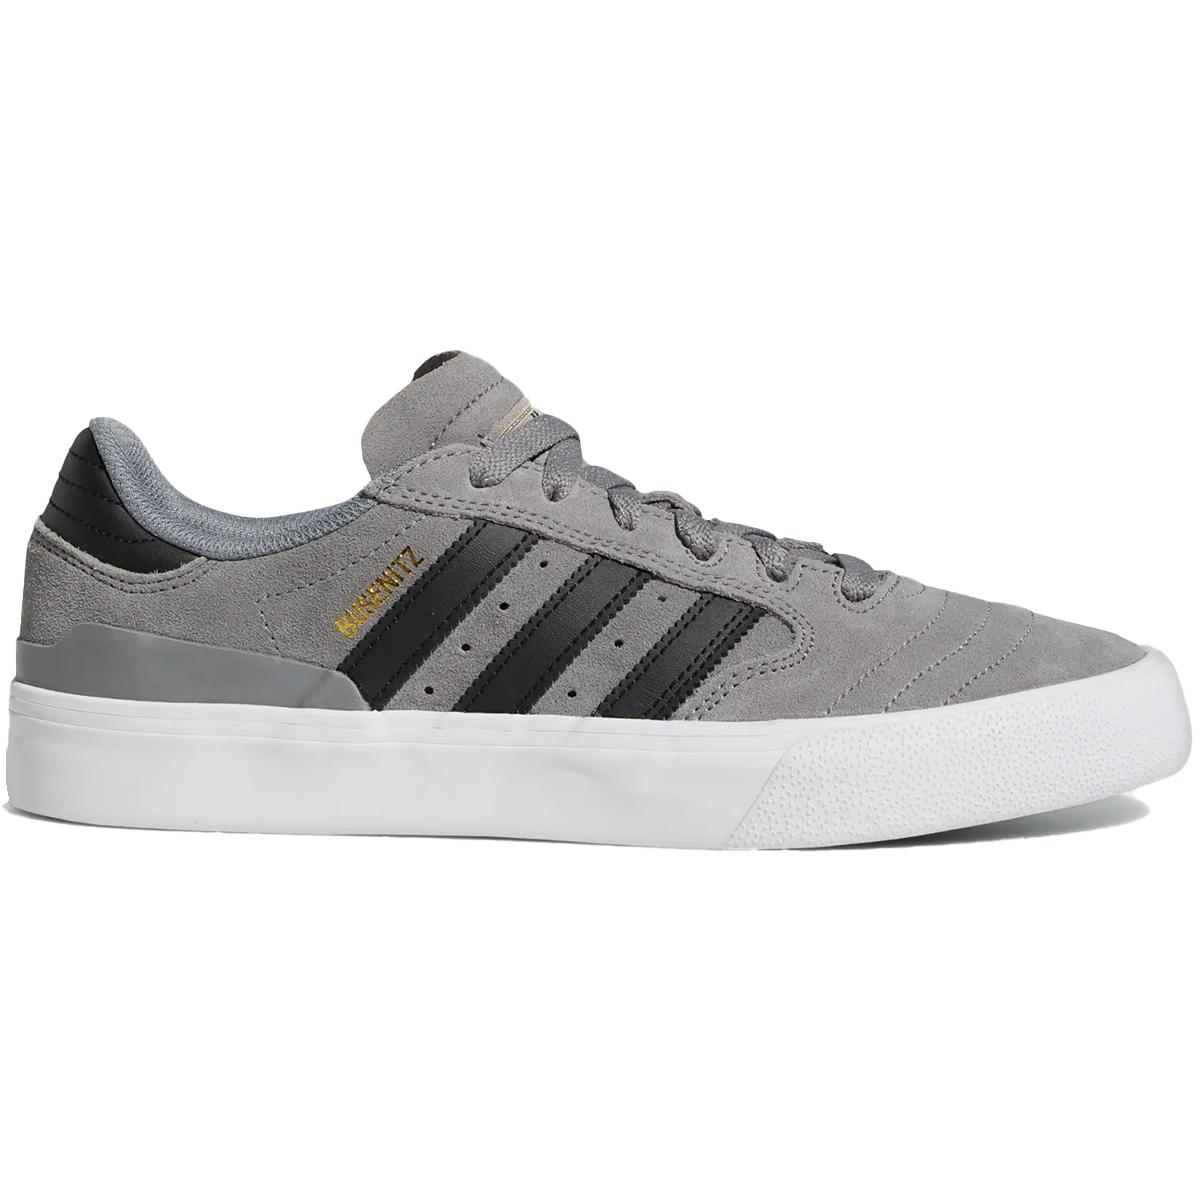 Adidas Busenitz II Skateboard Shoes, Grey/Black/White